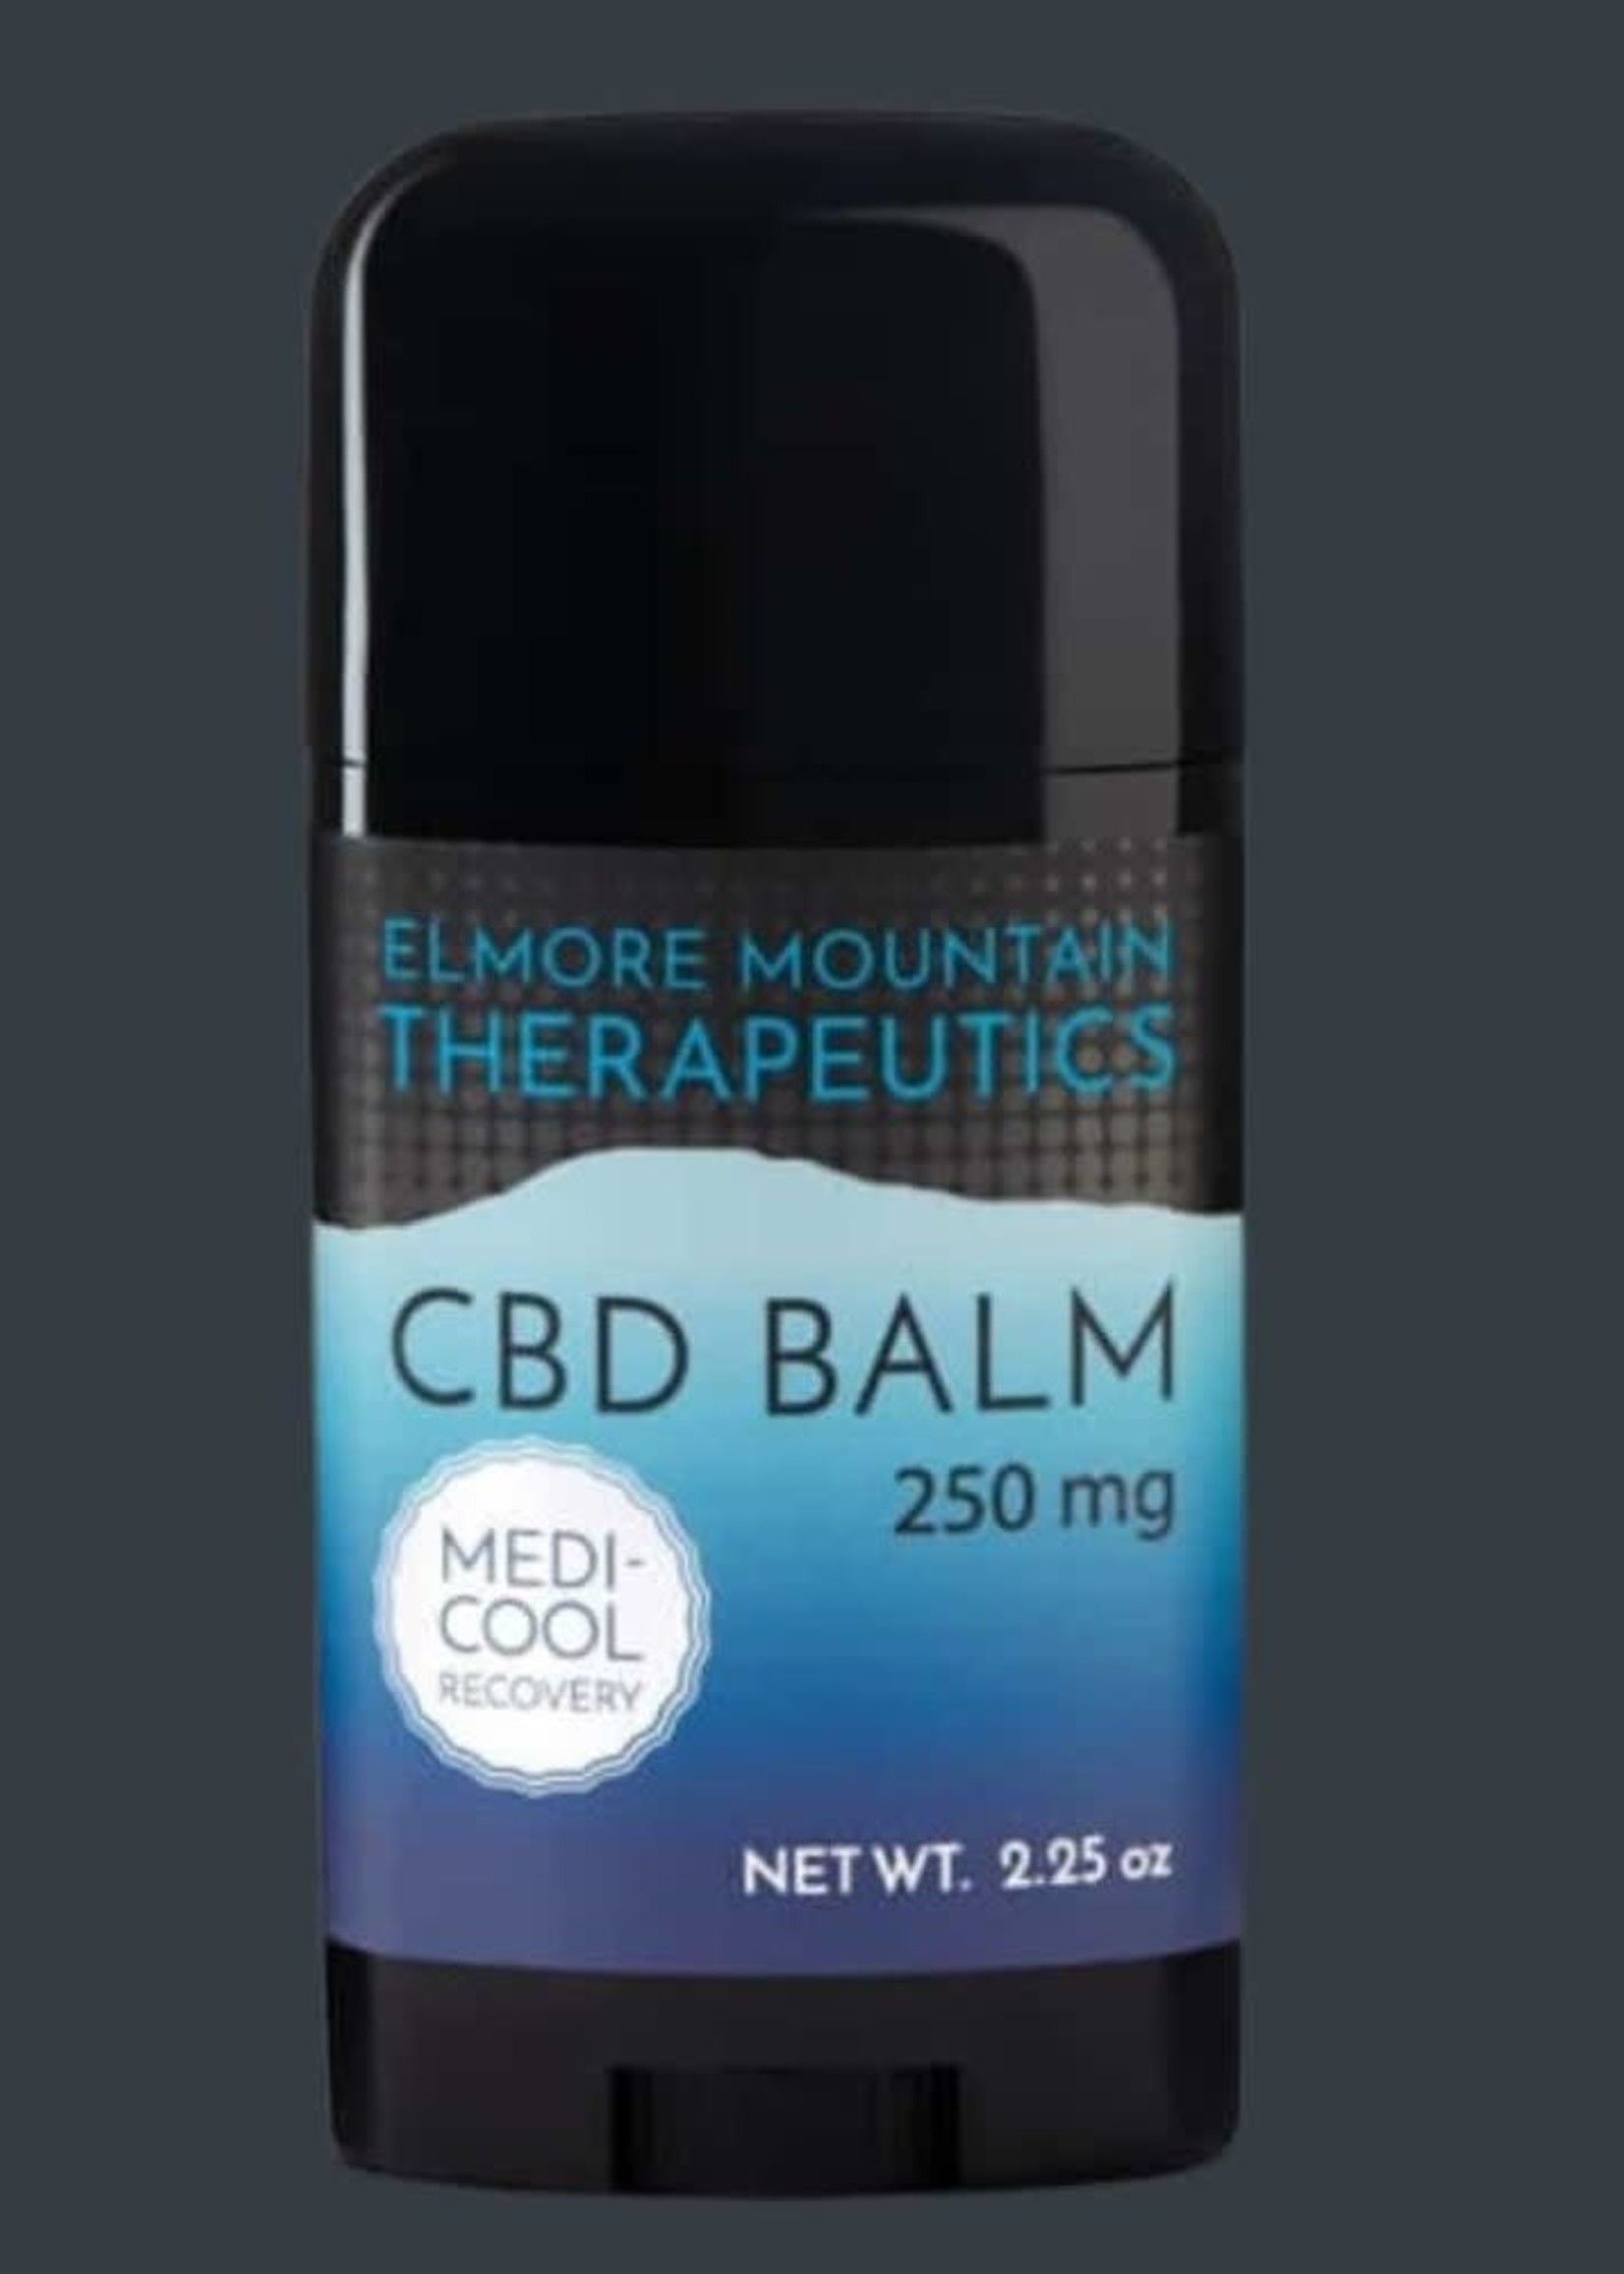 Elmore Mountain Therapeutics EMT, Menthol Medi-Cool CBD Balm, 2.25oz 250mg